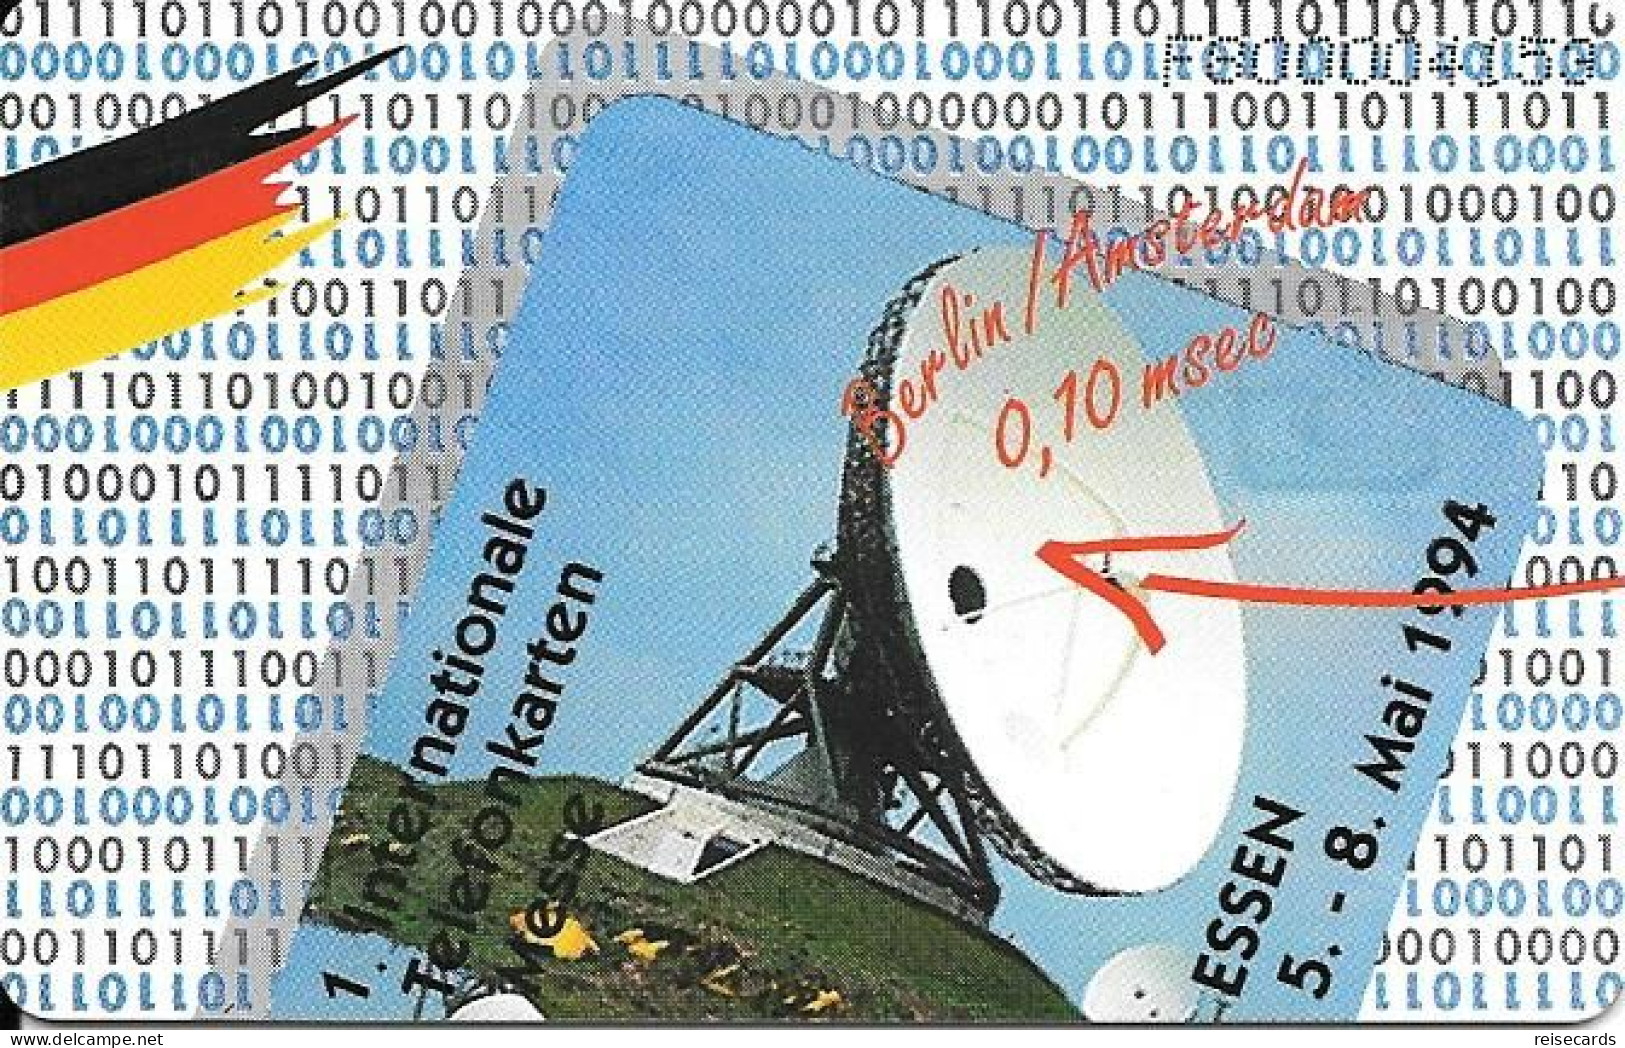 Netherlands: Ptt Telecom - 1994 1. Internationale Telefoonkaarten Beurs 94 Essen. Mint - Públicas